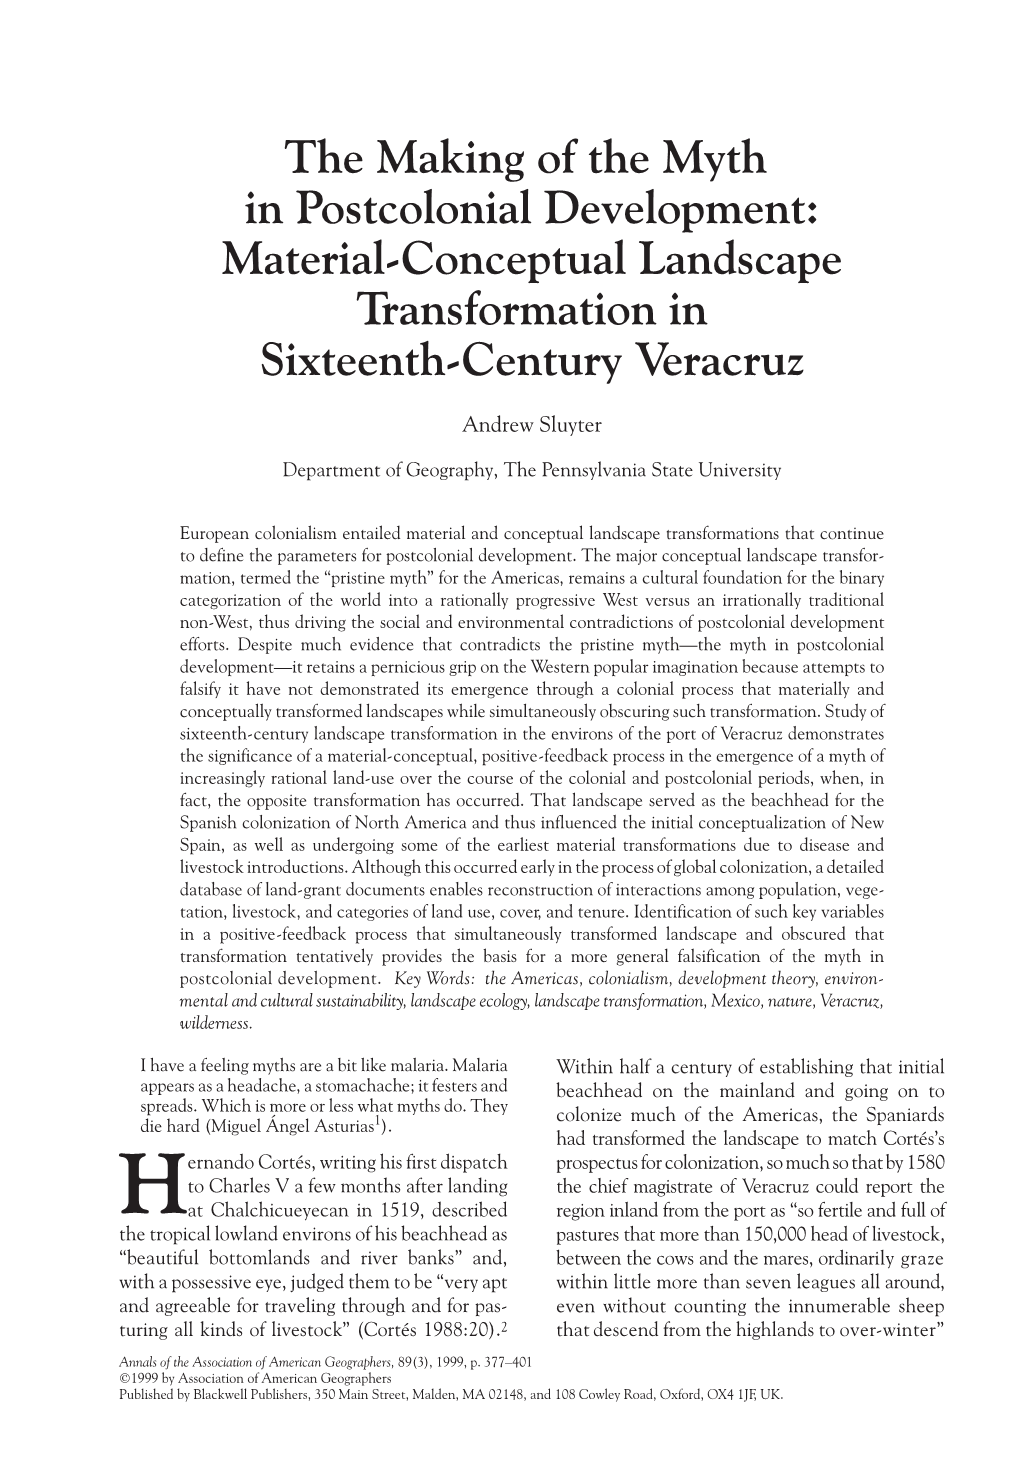 Material-Conceptual Landscape Transformation in Sixteenth-Century Veracruz